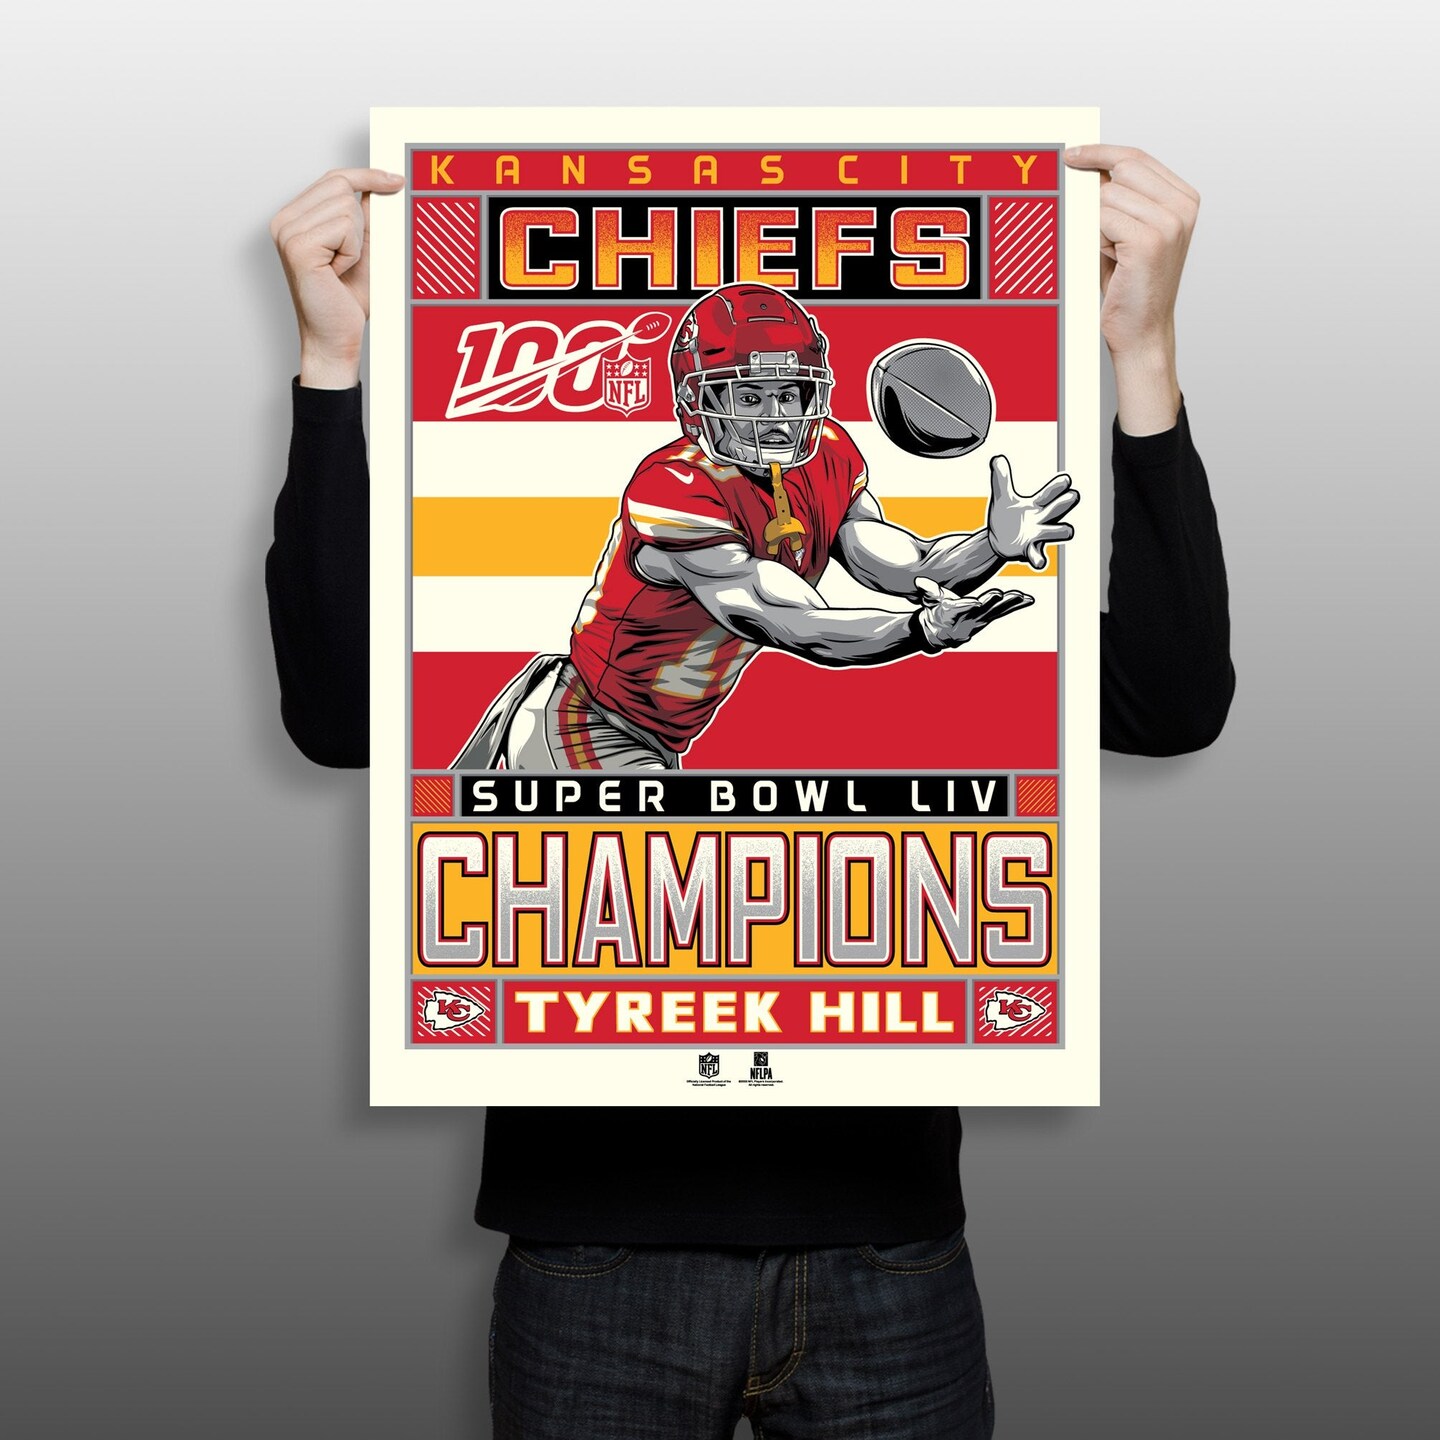 Kansas City Chiefs Super Bowl LIV champions